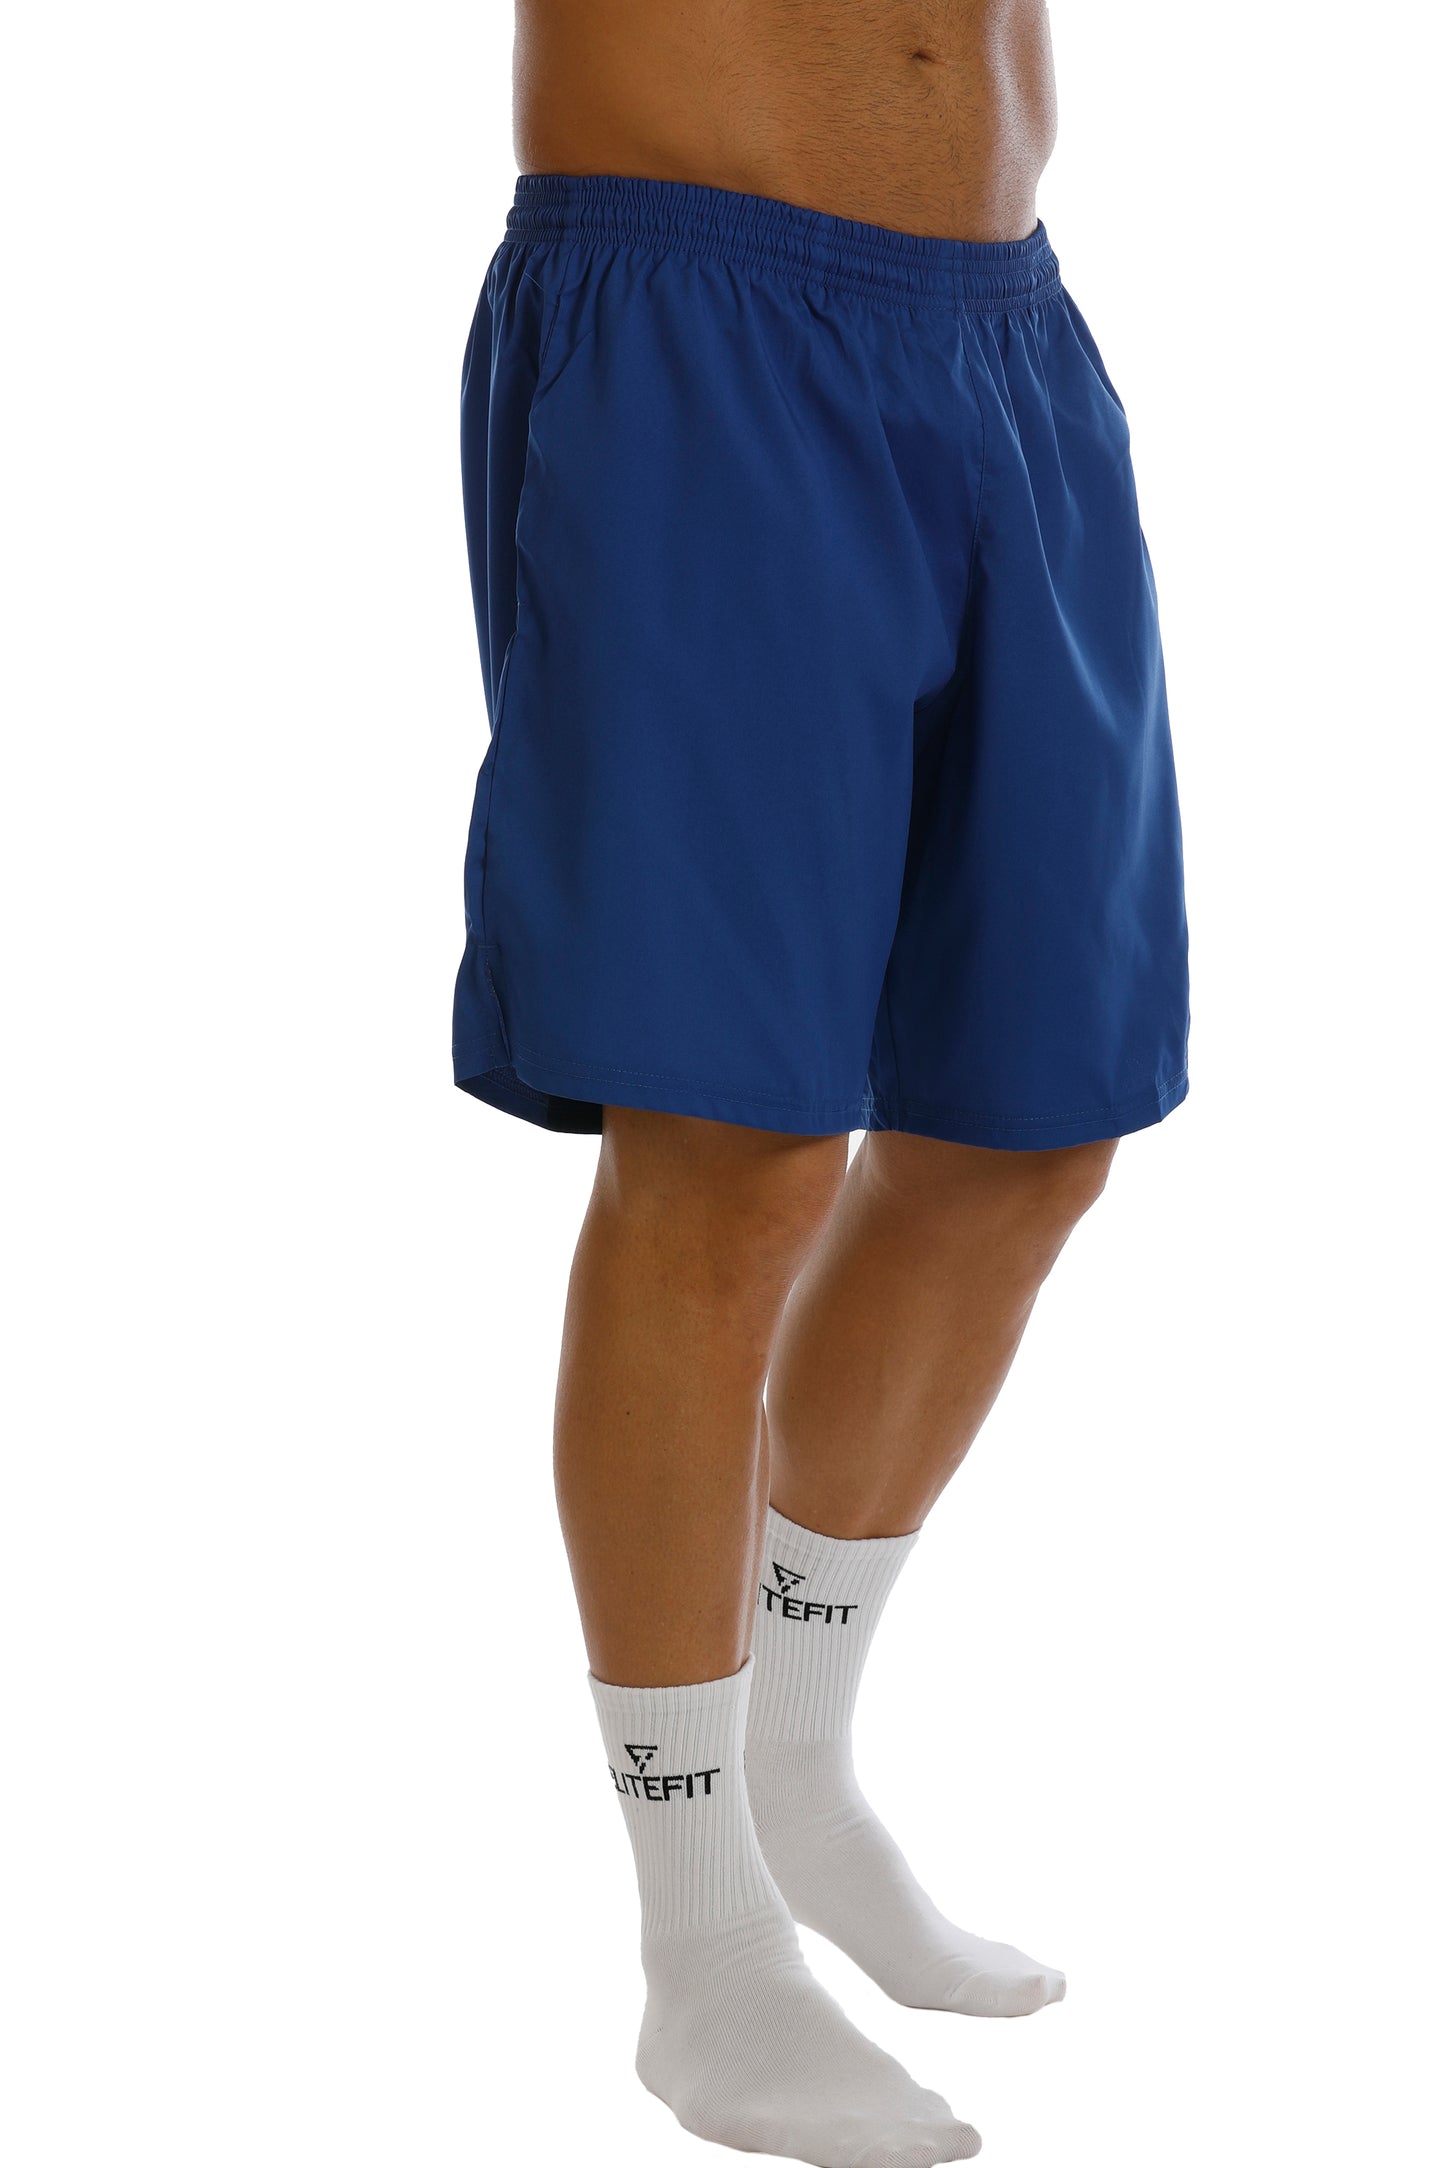 ANZETY shorts (blue)